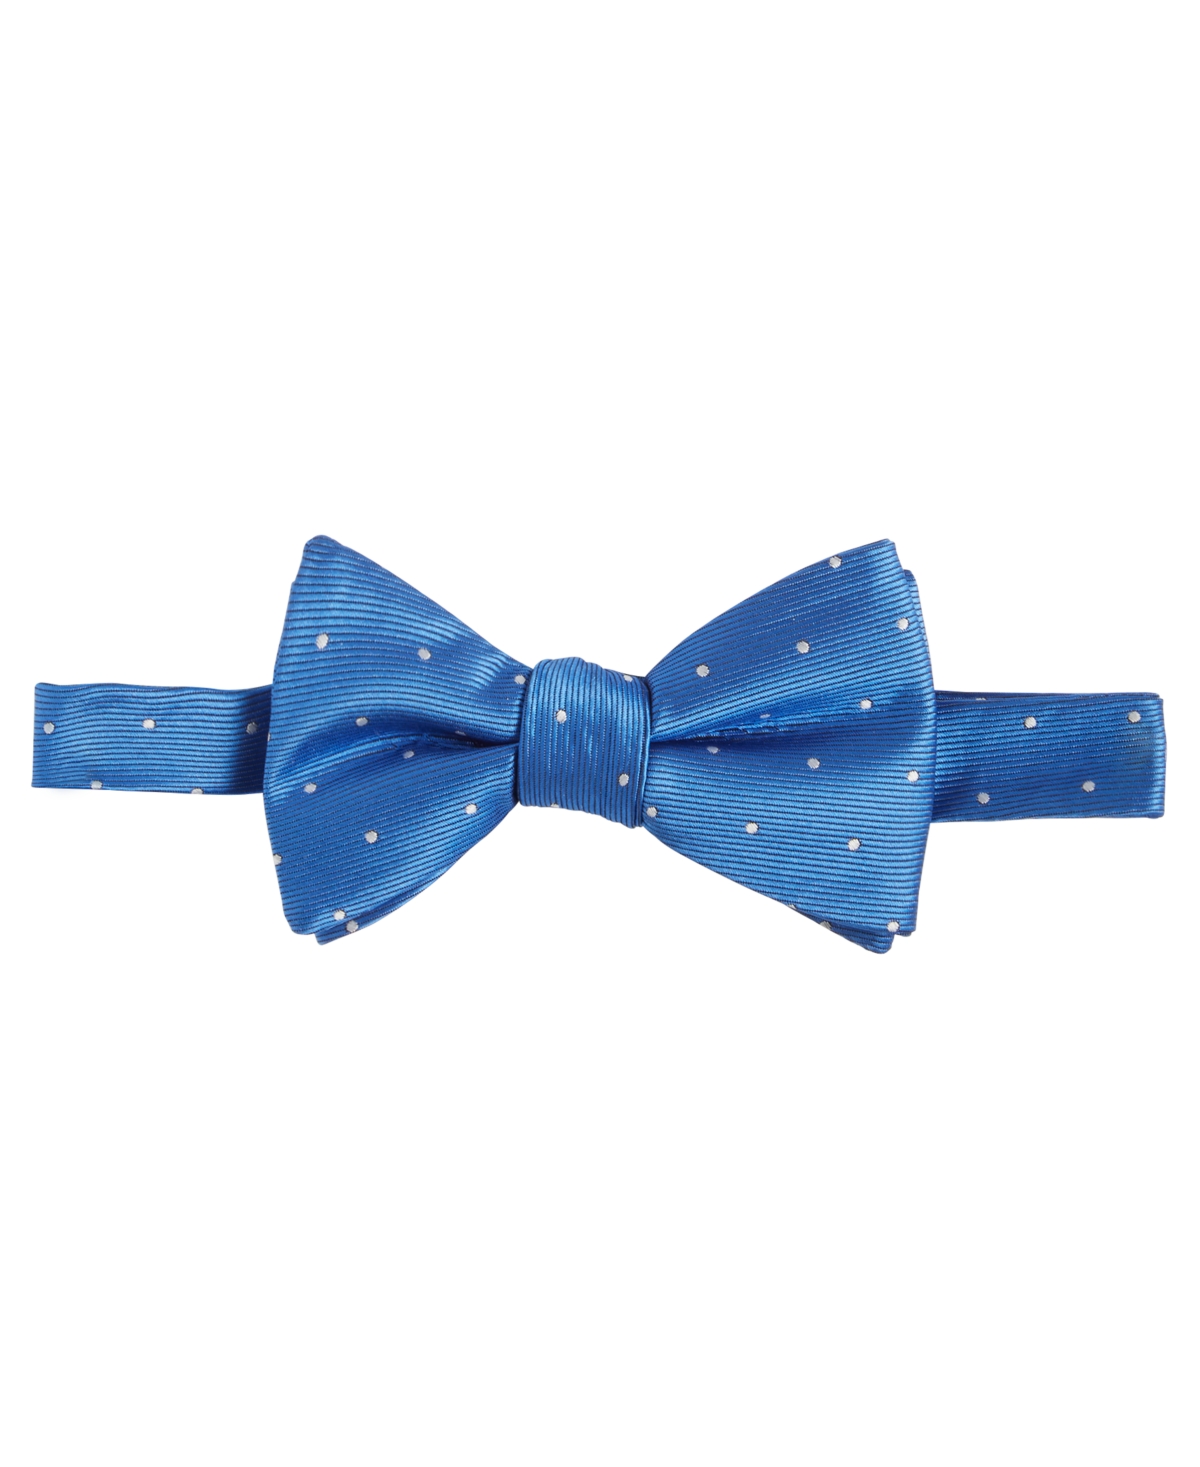 Men's Royal Blue & White Dot Bow Tie - Blue